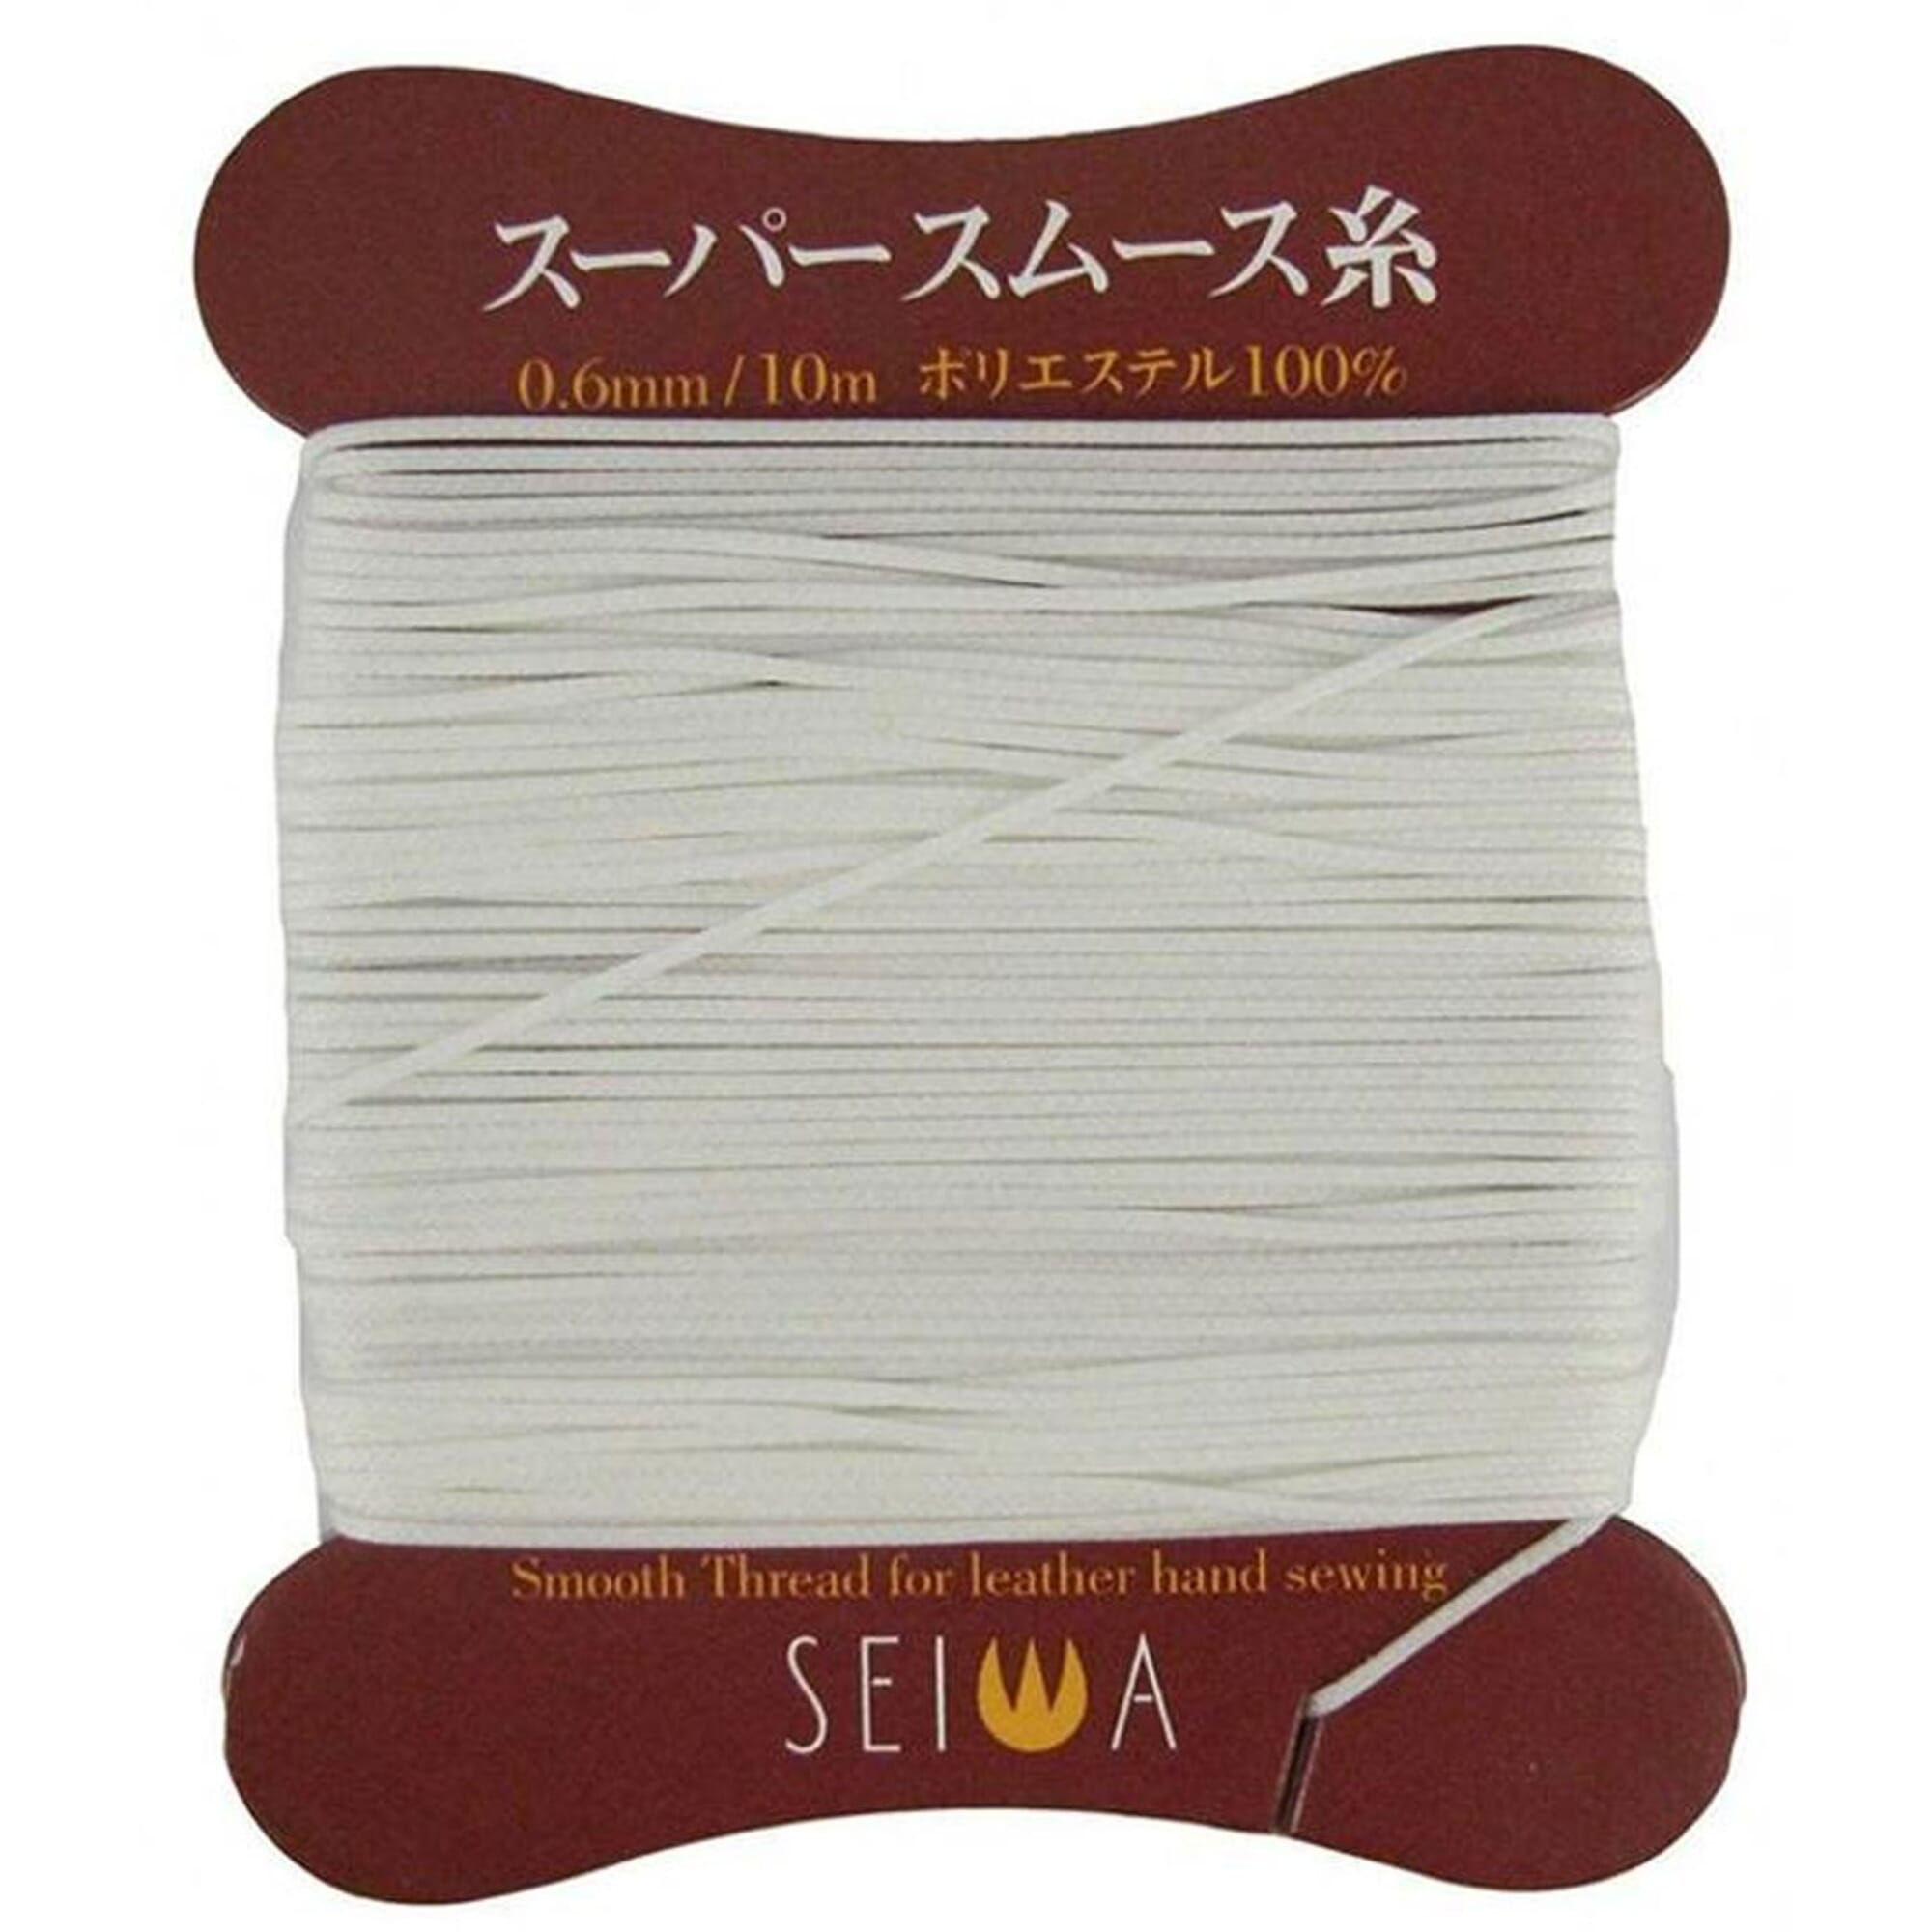 Seiwa Super Smooth Yarn 0.6mm White